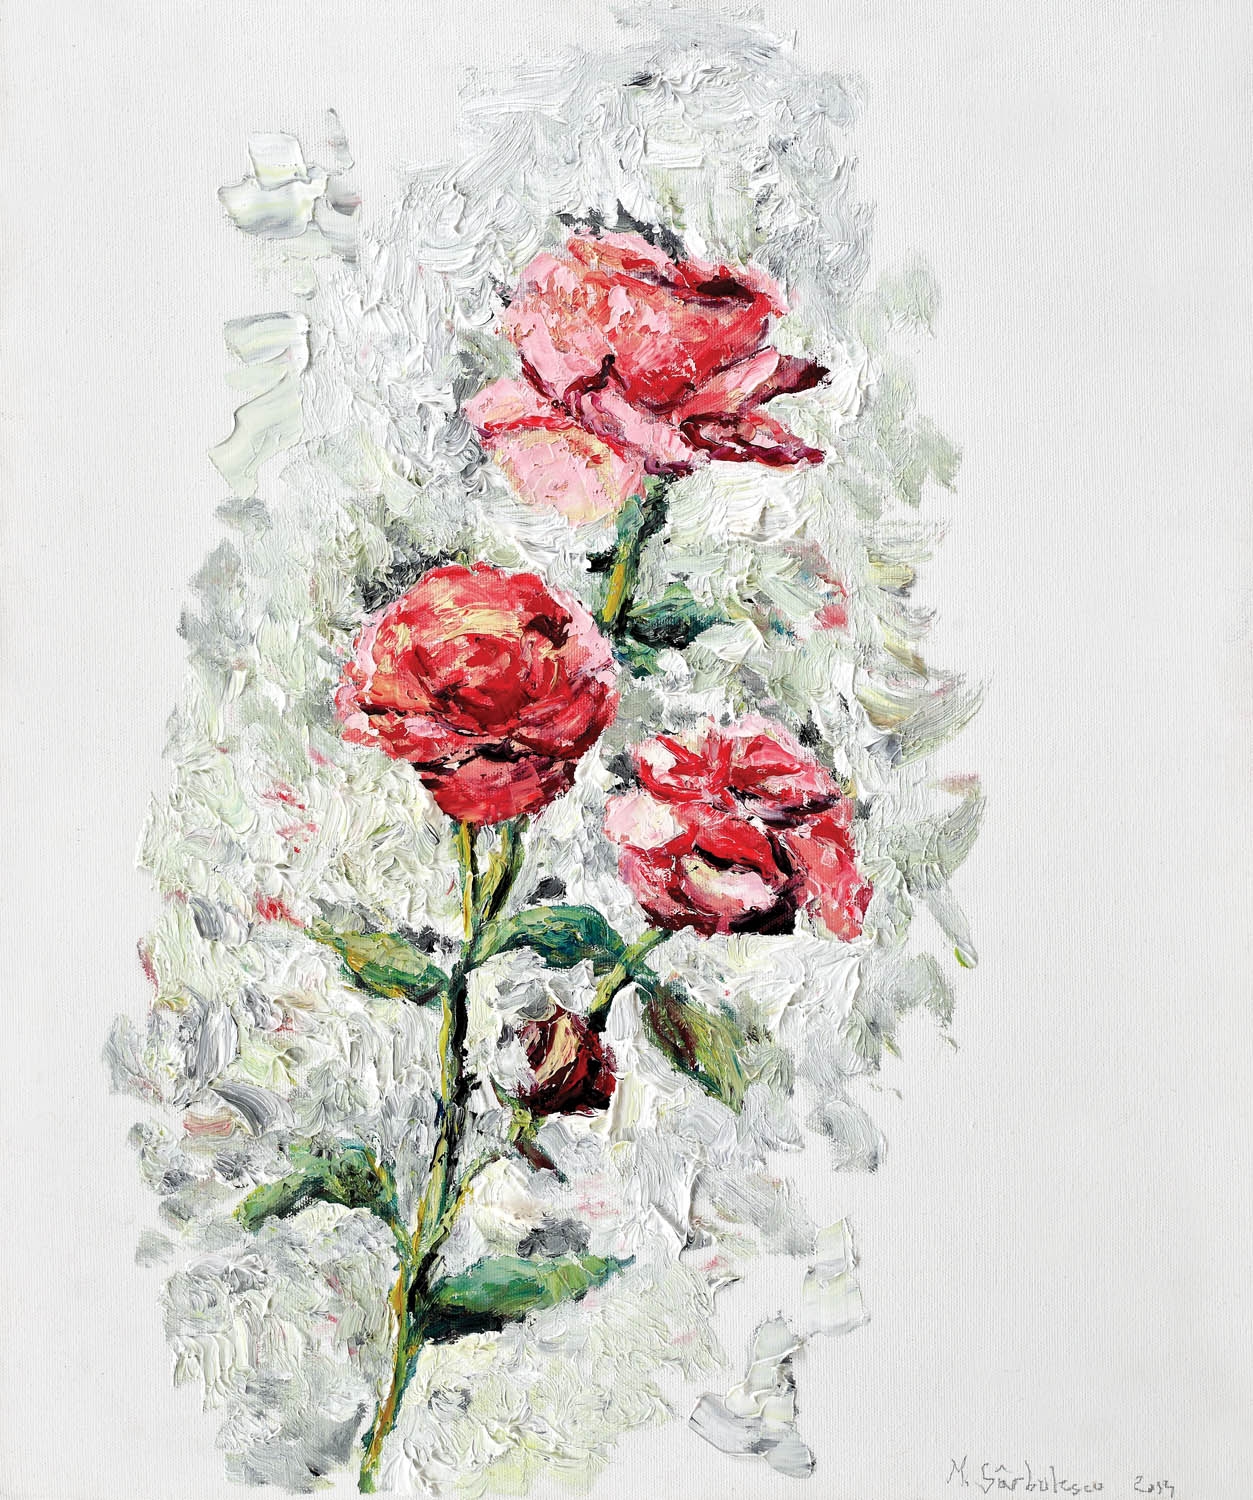 Trandafiri by Mihai Sarbulescu, 2014